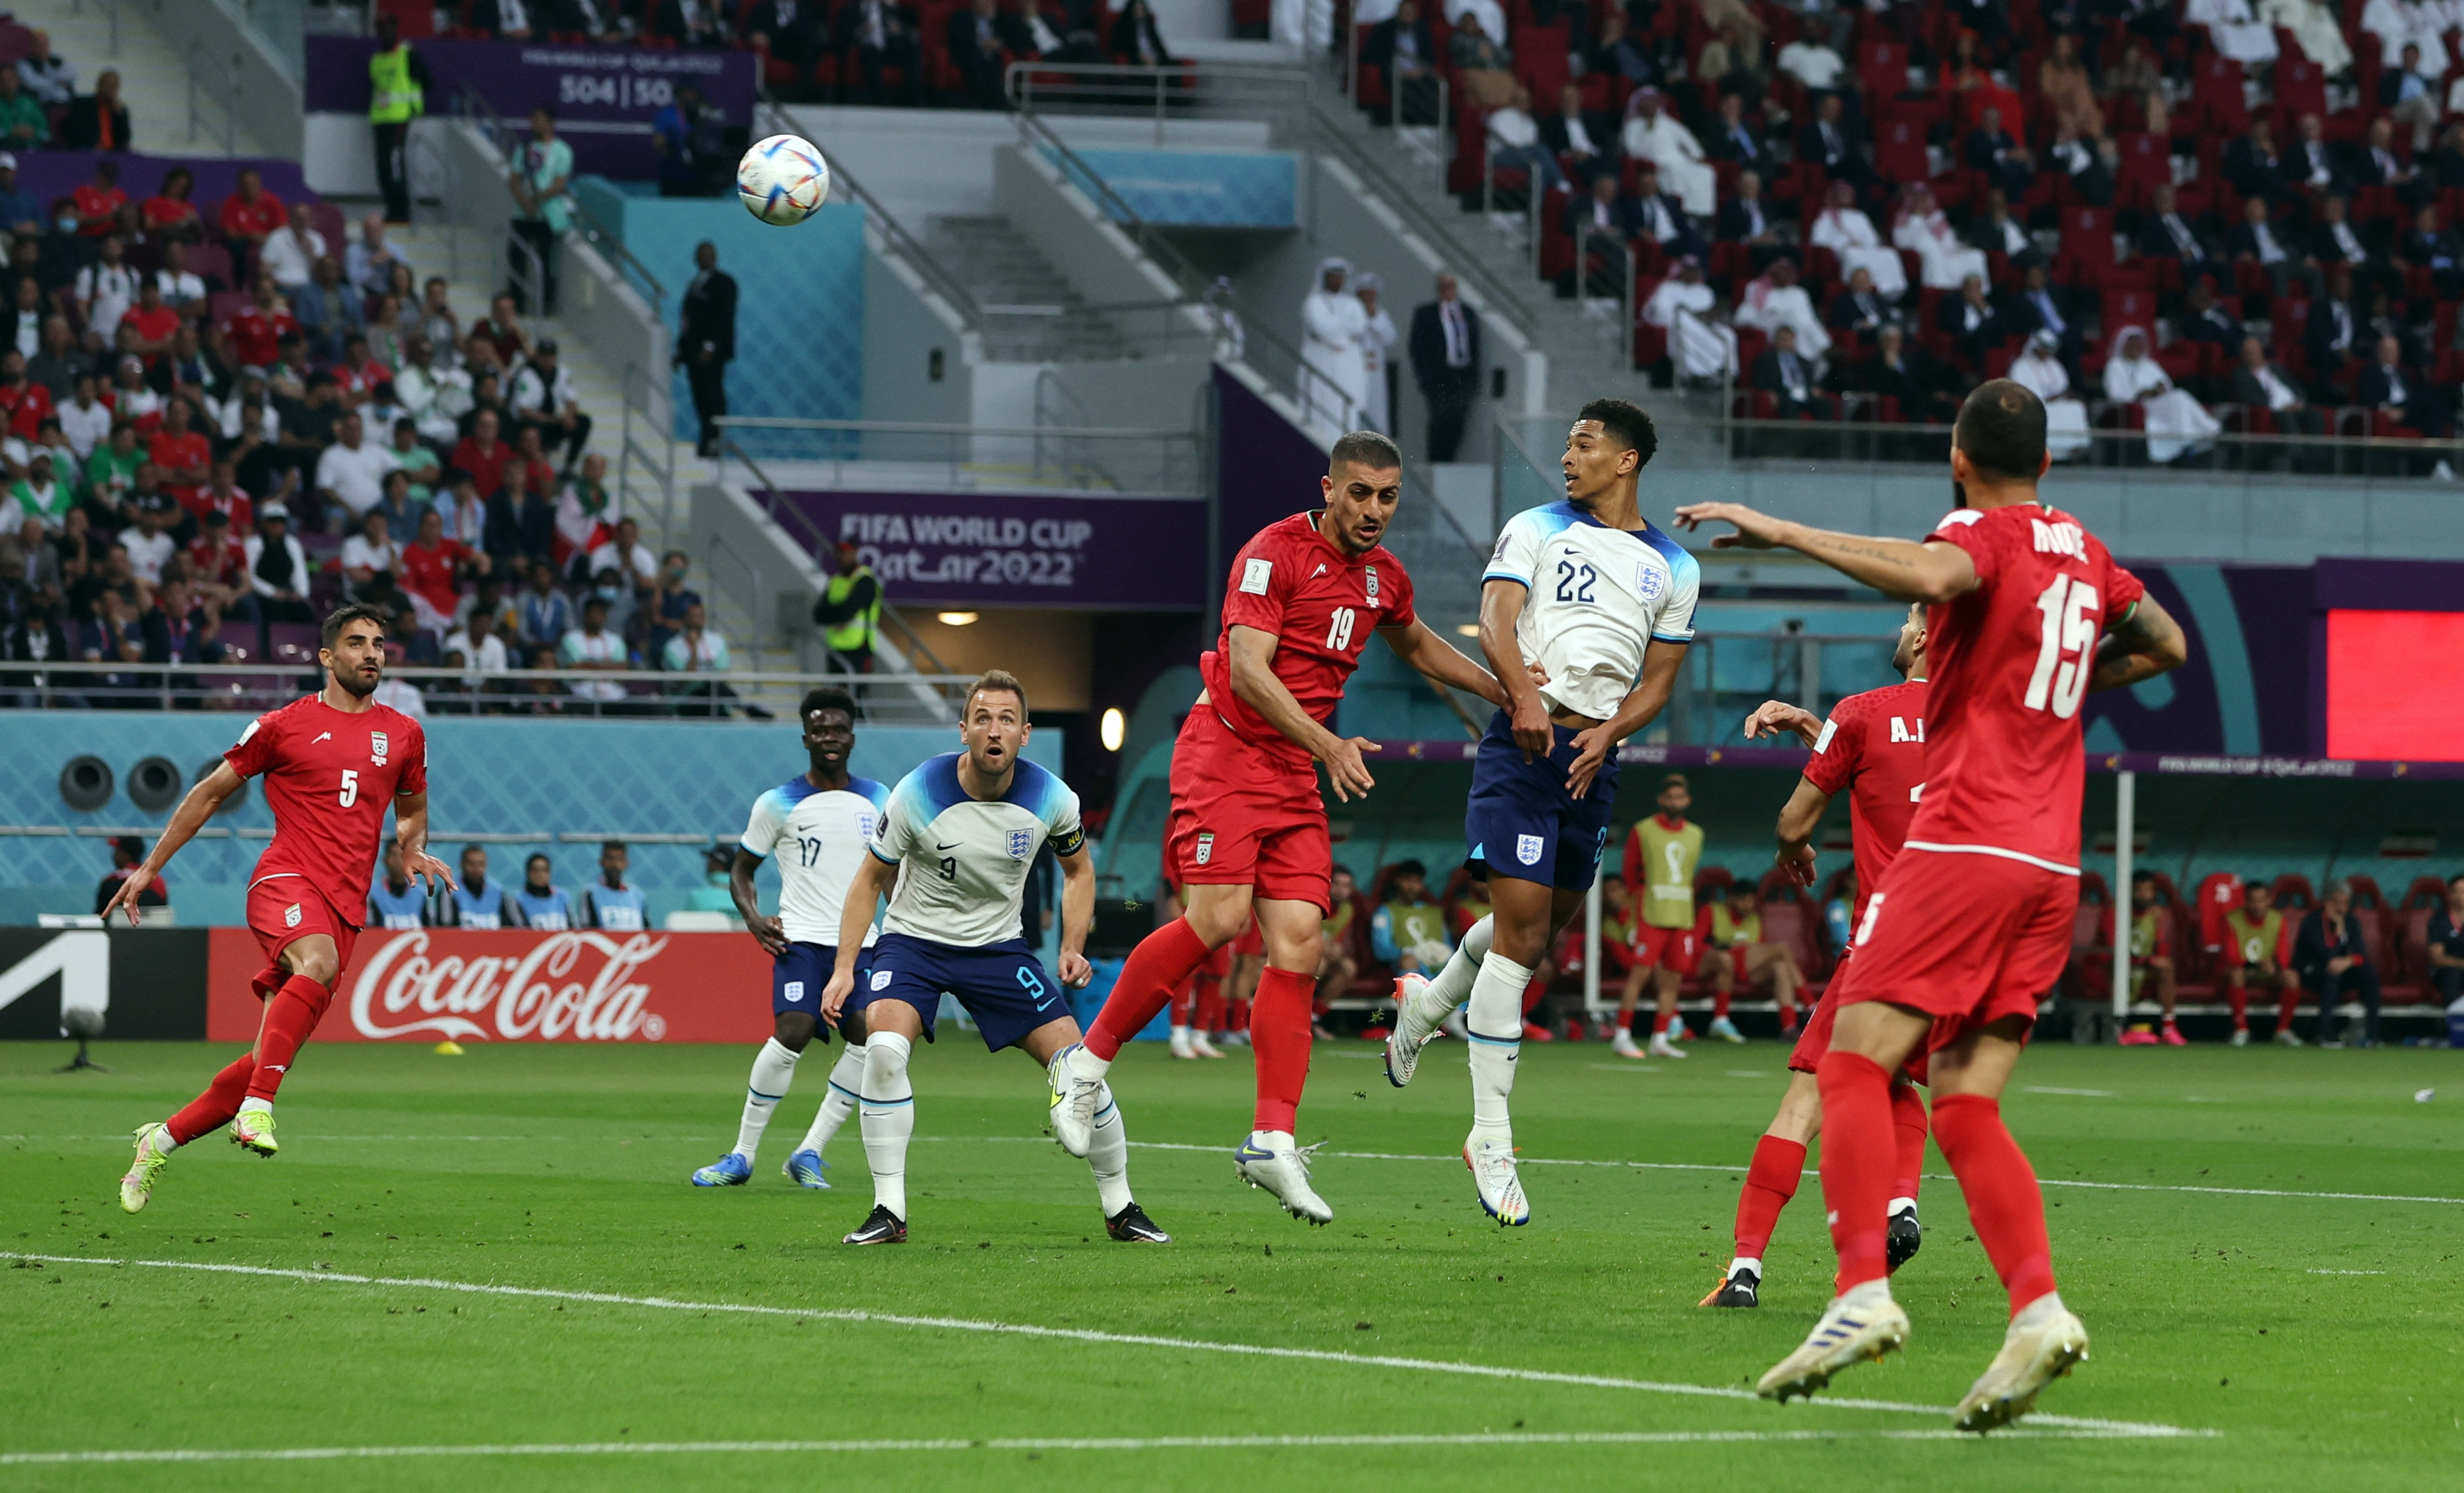 Soccer Football - FIFA World Cup Qatar 2022 - Group B - England v Iran - Khalifa International Stadium, Doha, Qatar - November 21, 2022 England's Jude Bellingham scores their first goal REUTERS/Paul Childs